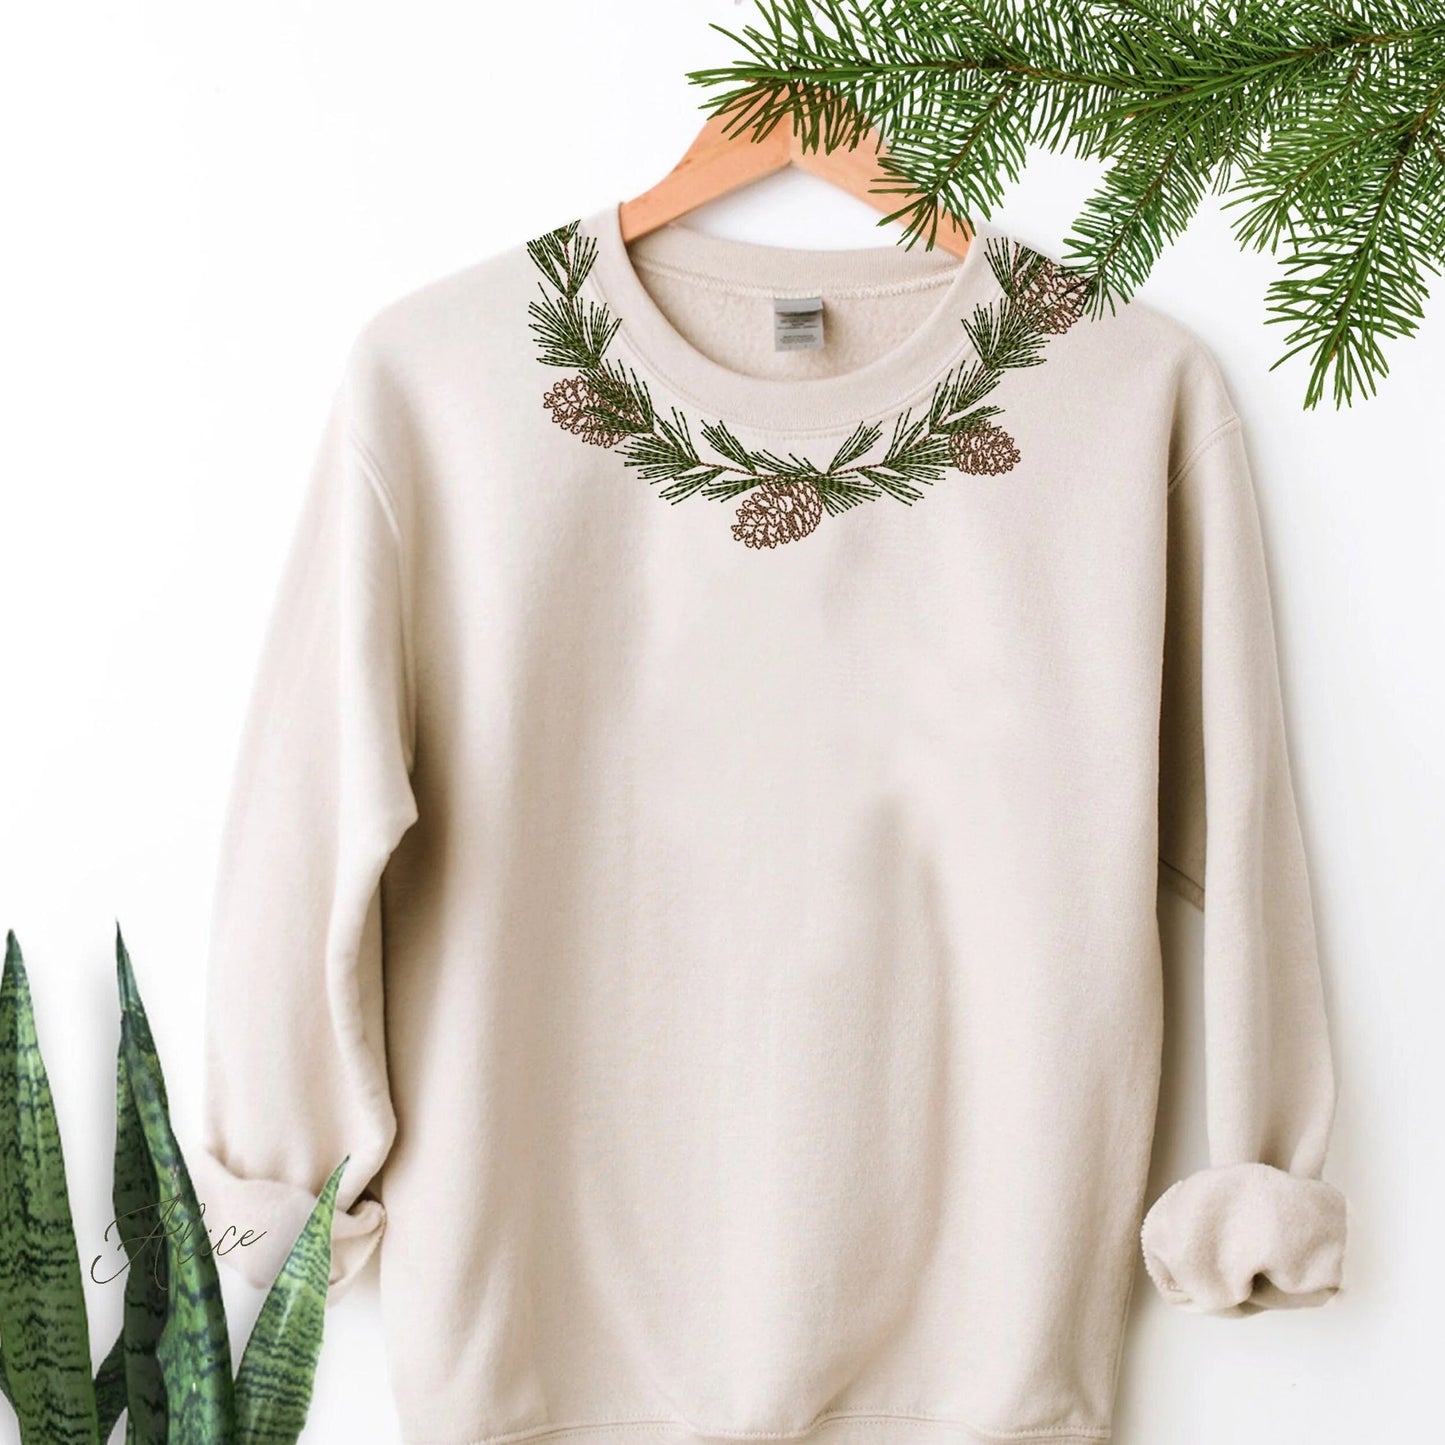 Christmas Pine Tree Monogram Wreath Machine Embroidery Design on blouse